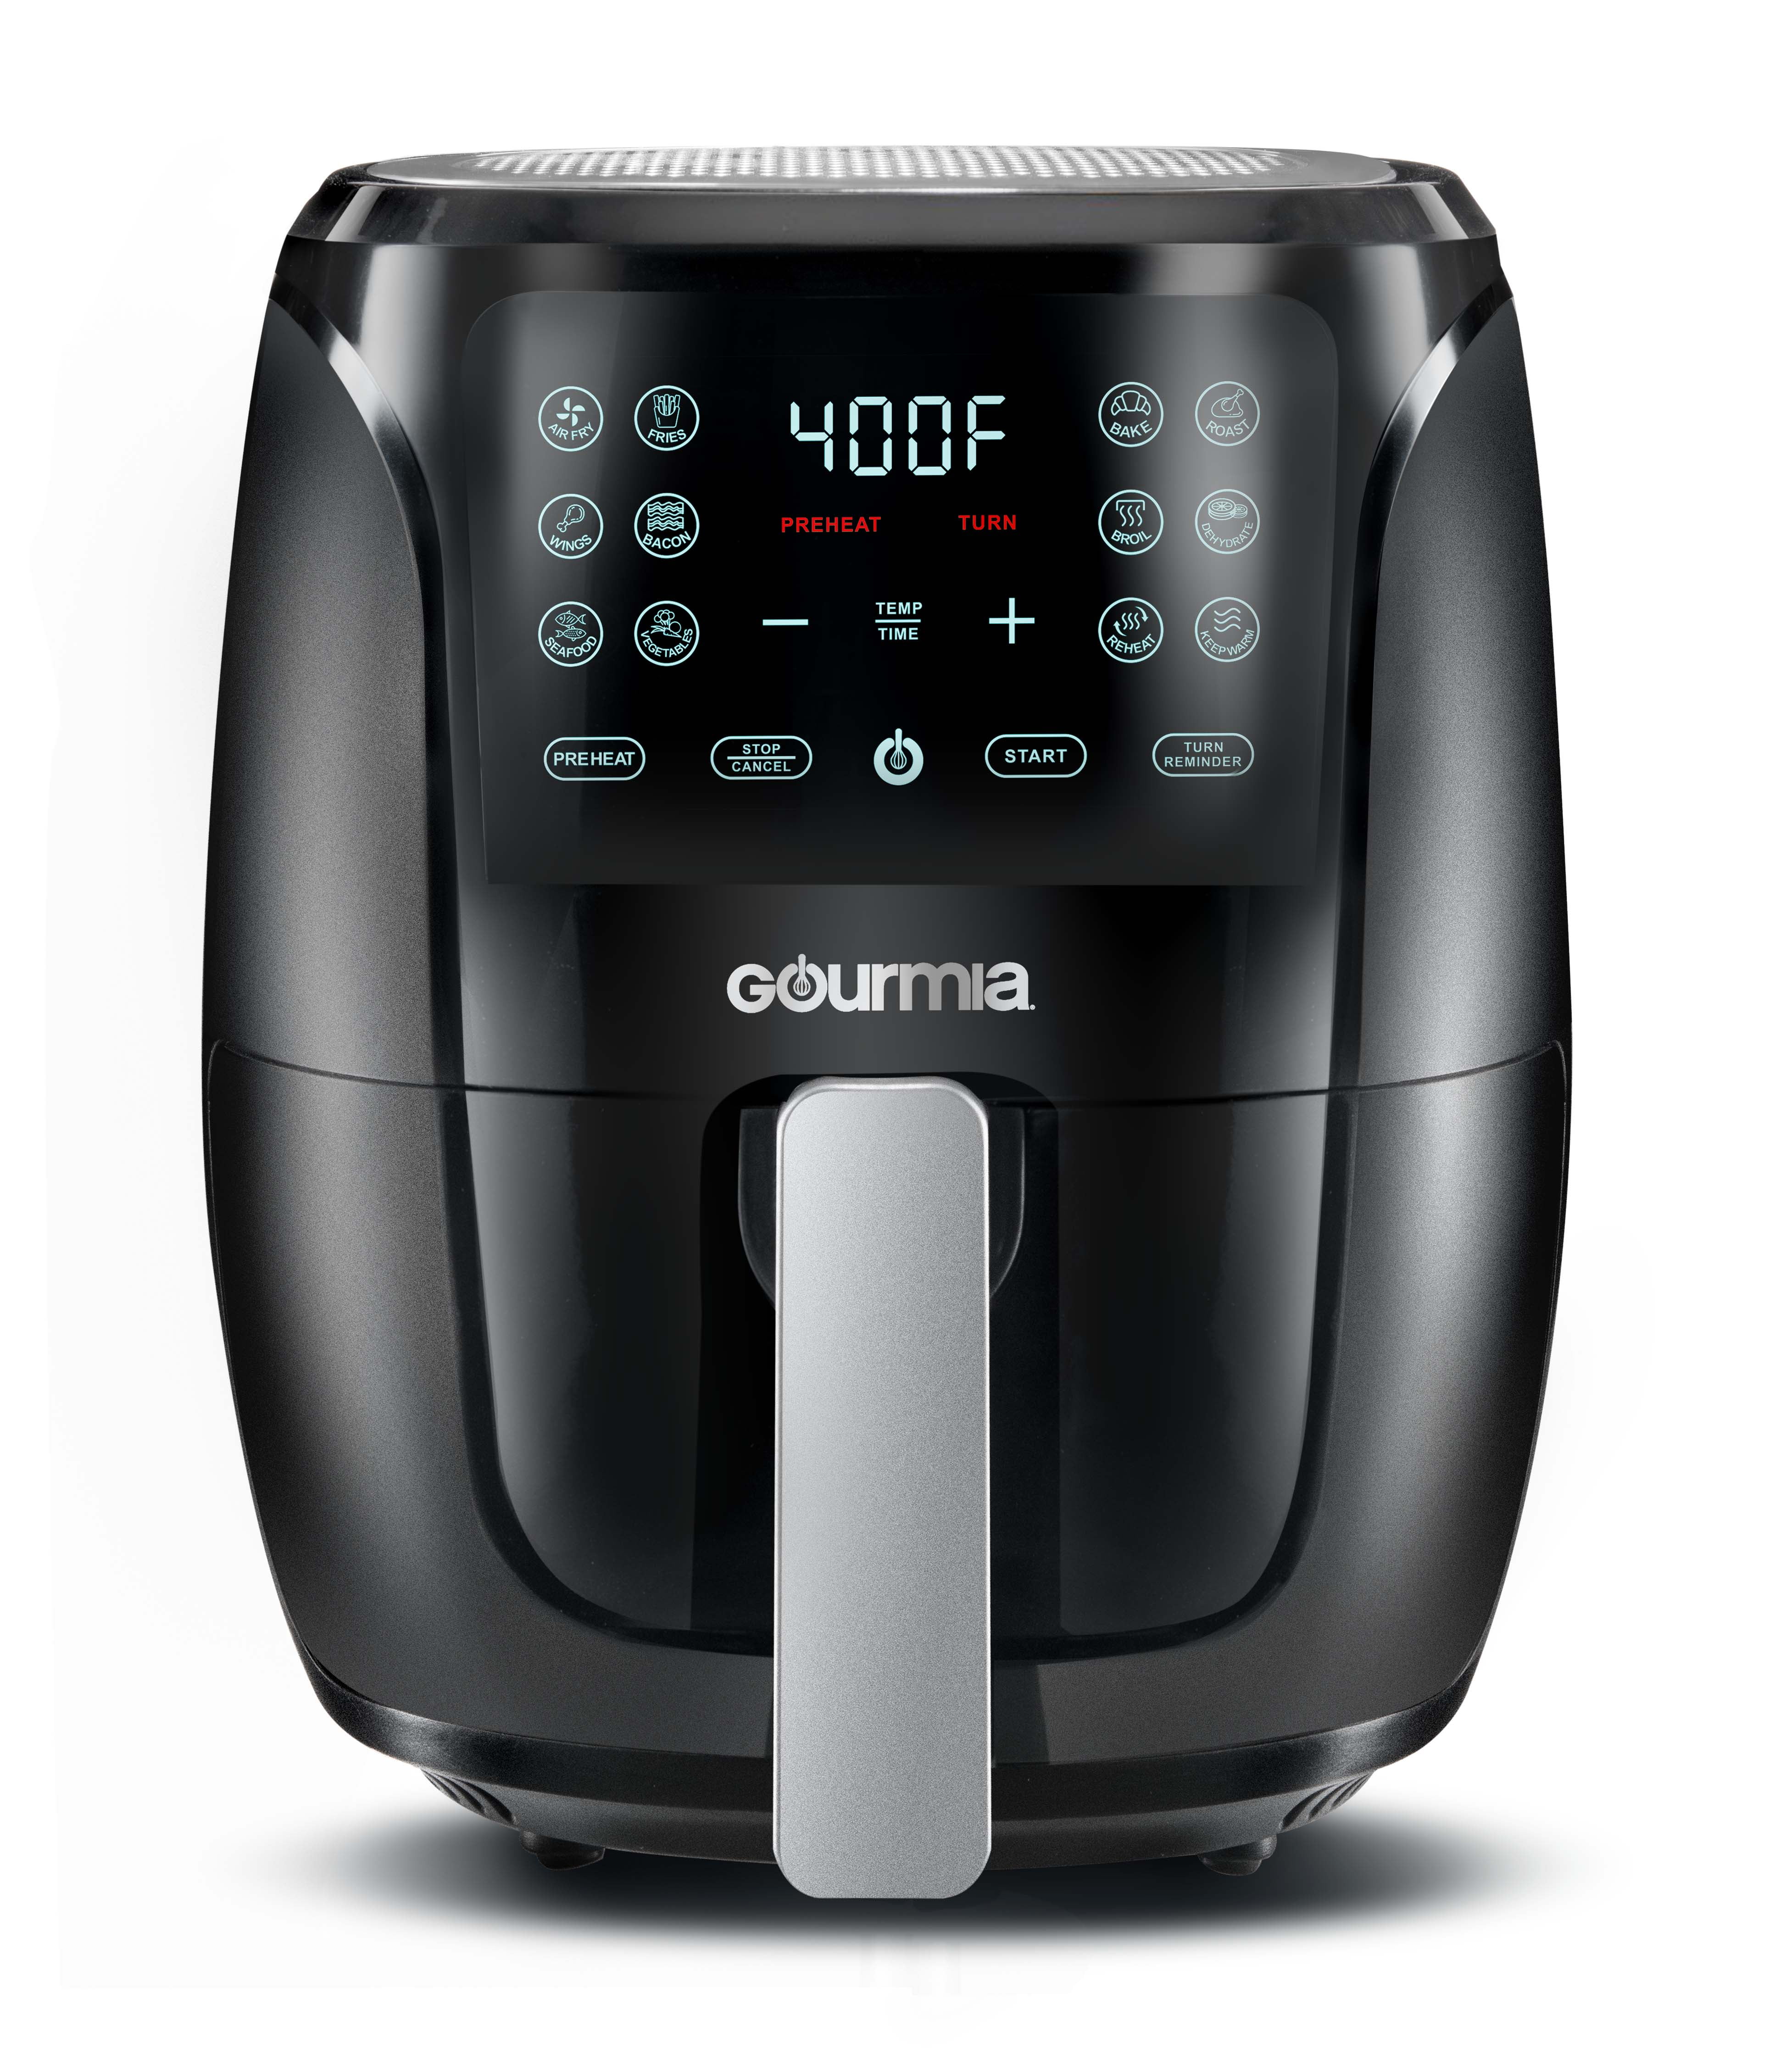 Gourmia 4 Qt Digital Air Fryer with Guided Cooking, Black GAF486